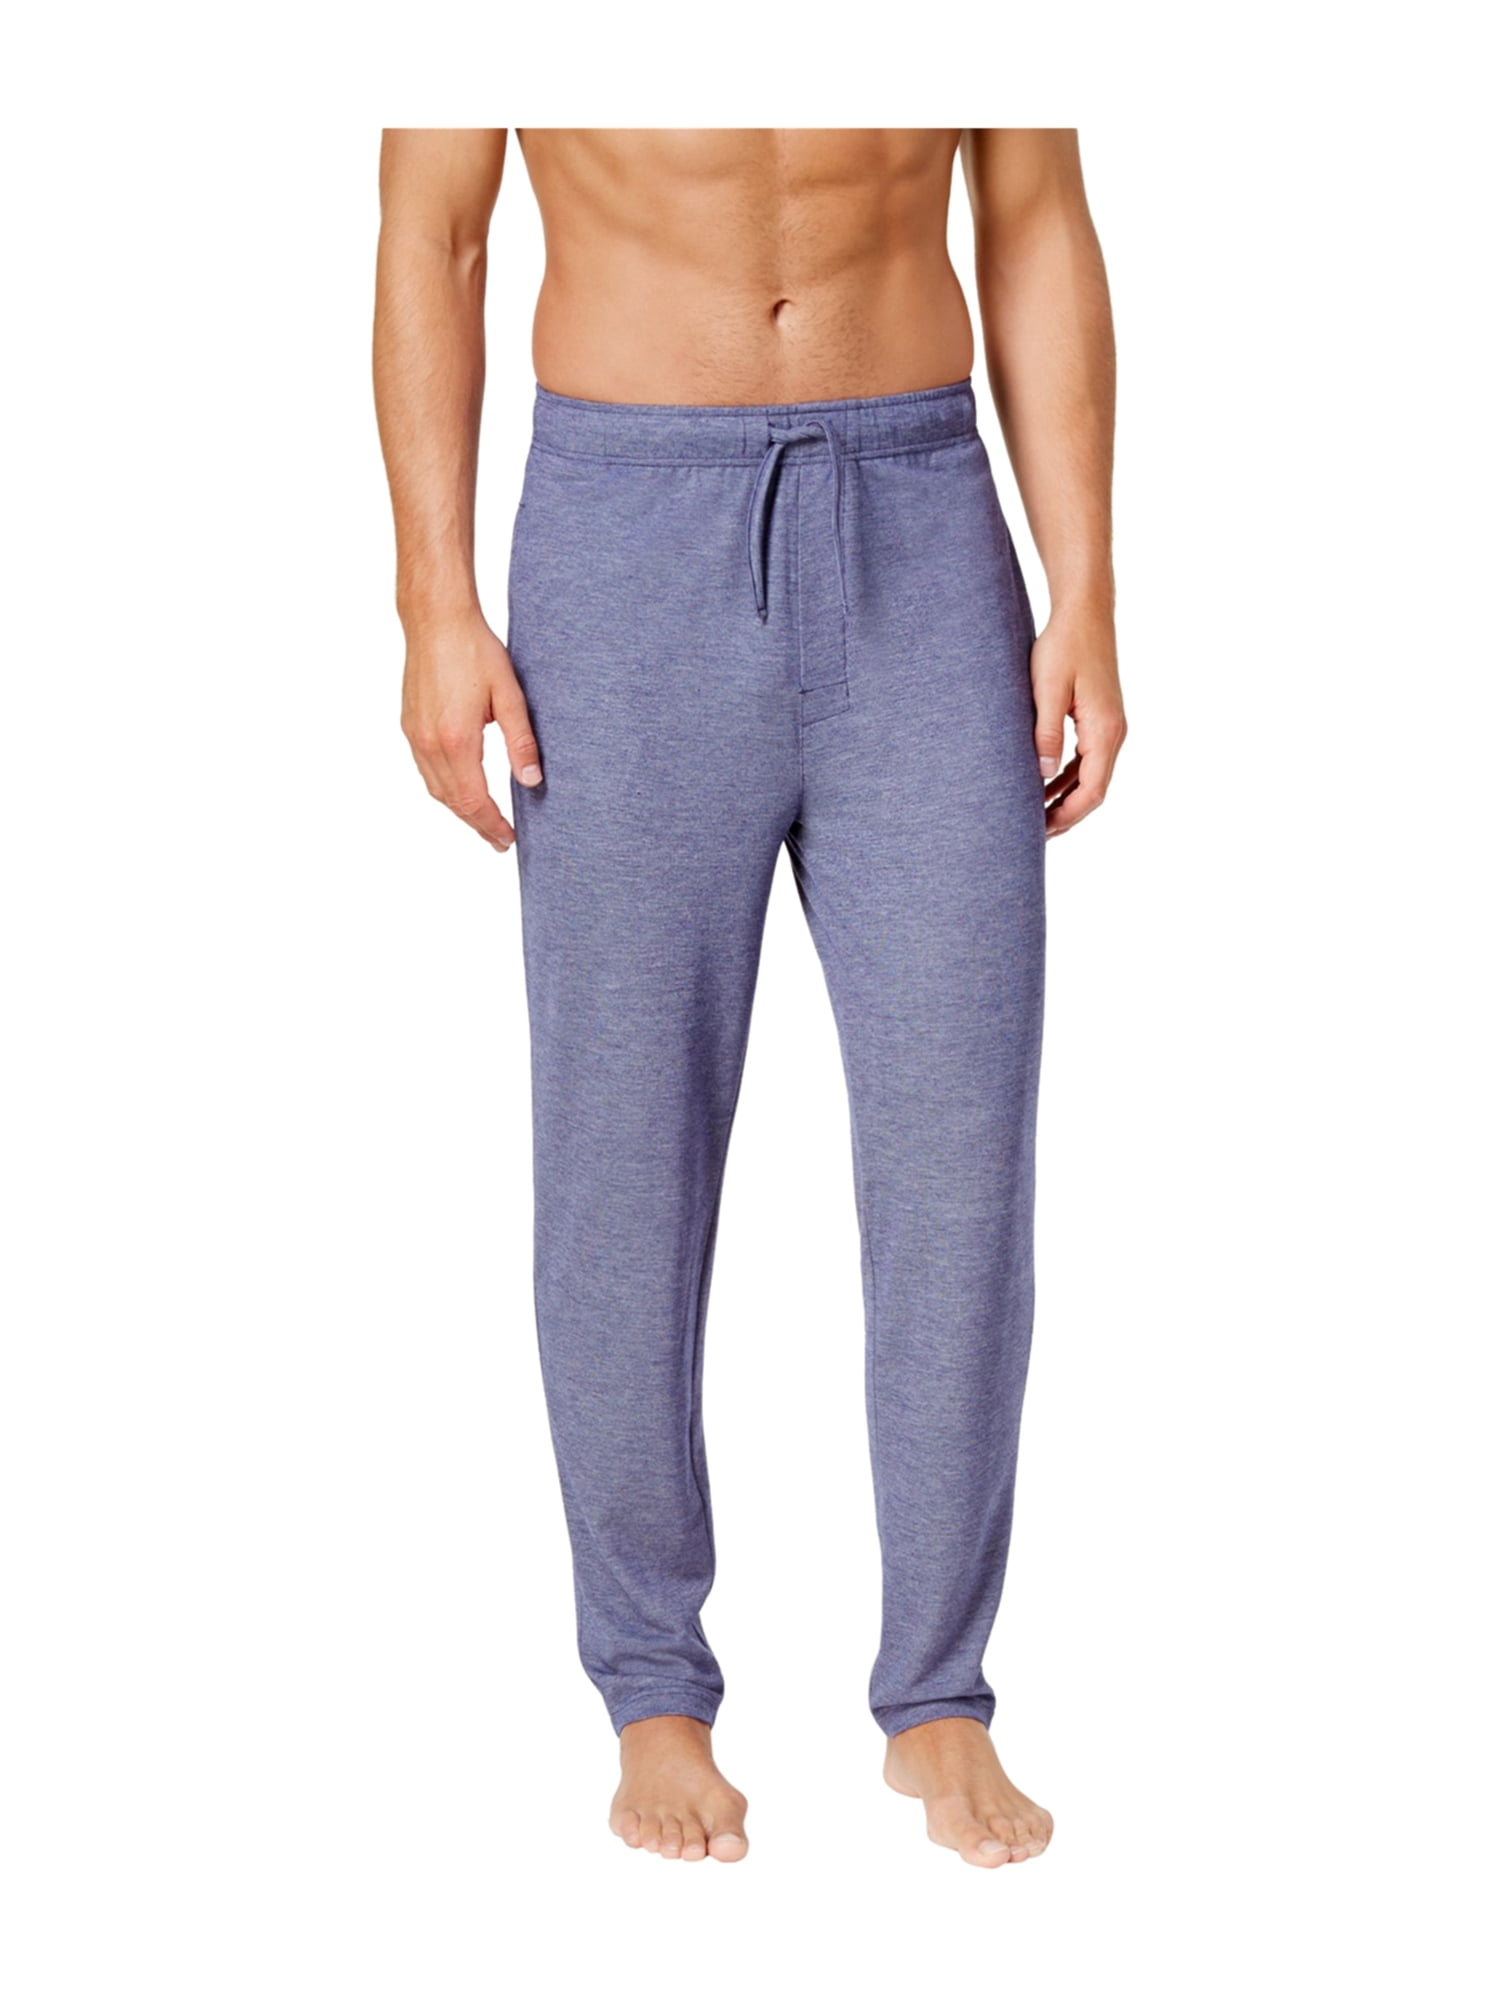 Weatherproof Mens Drawstring Pajama Lounge Pants htmarnavy1t XL/29 ...